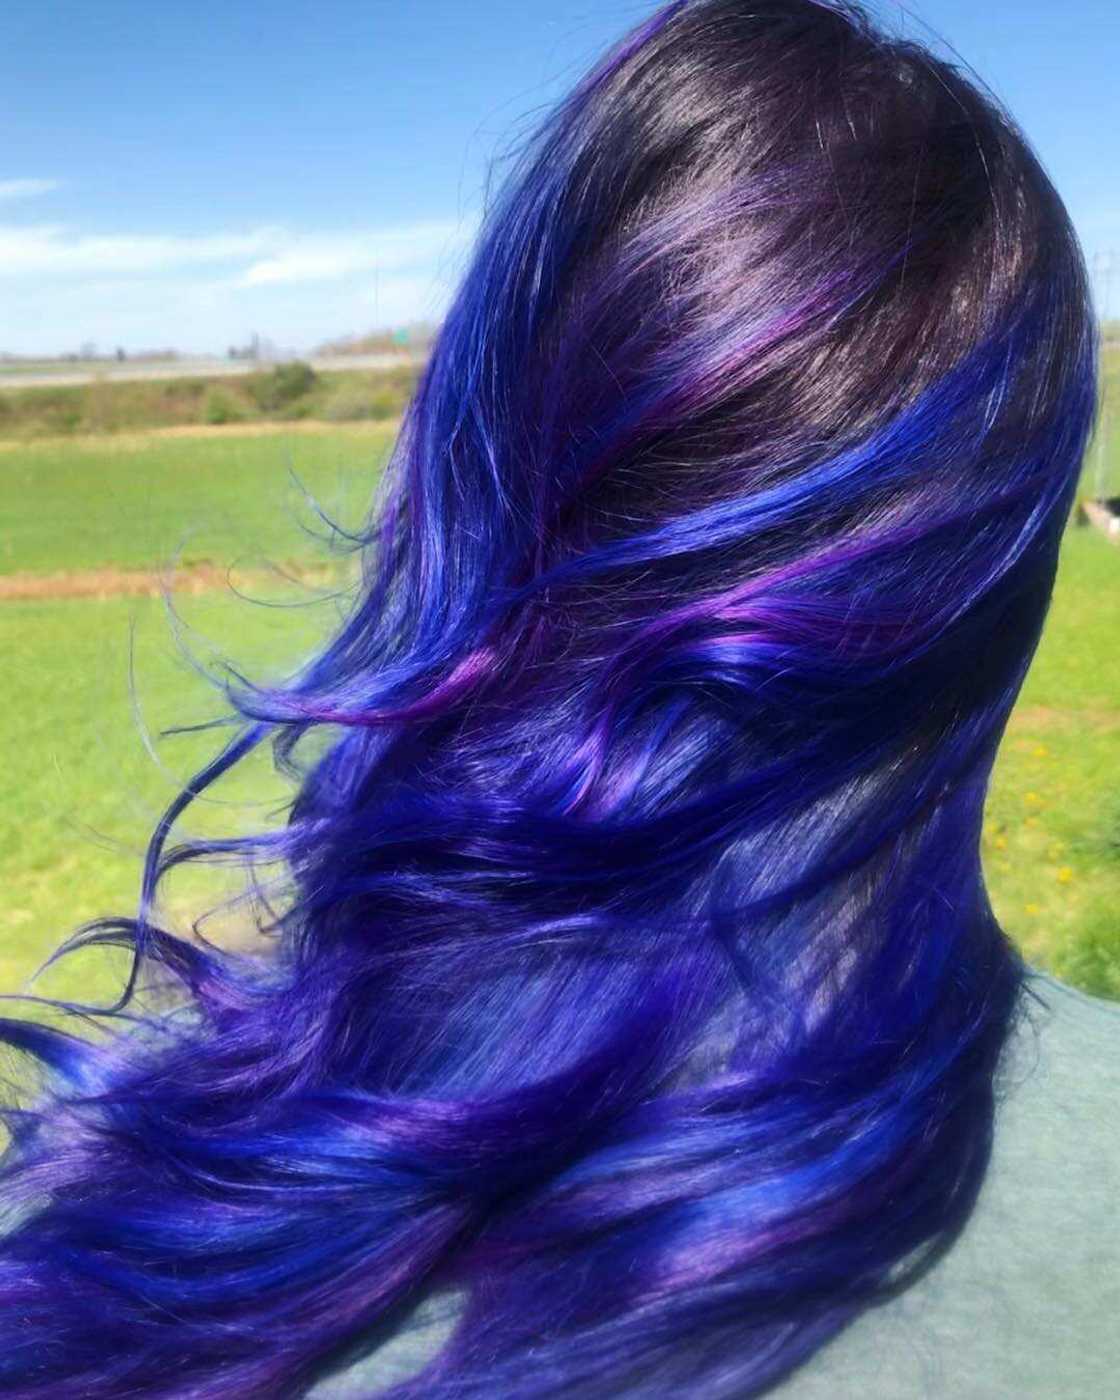 Multicolored hair